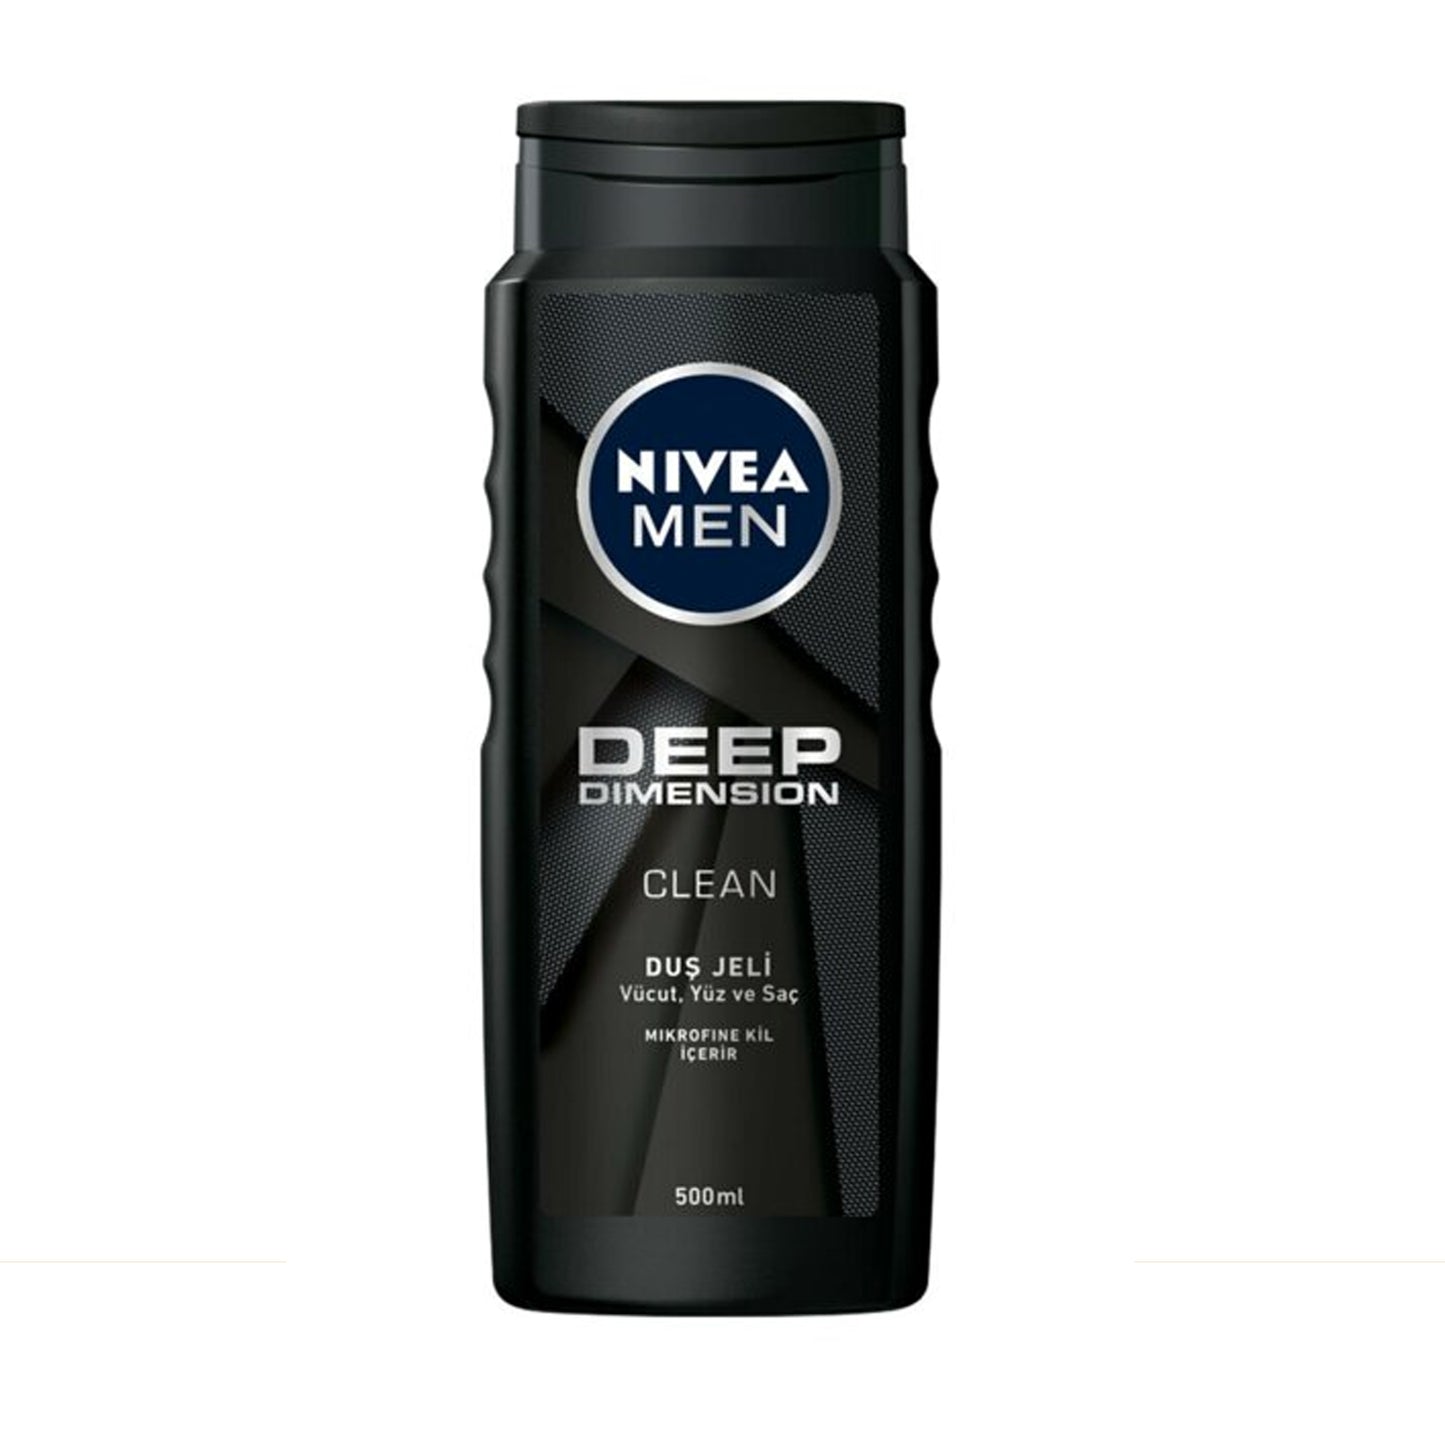 NIVEA MEN - DEEP DIMENSION CLEAN SHOWER GEL - 500ML